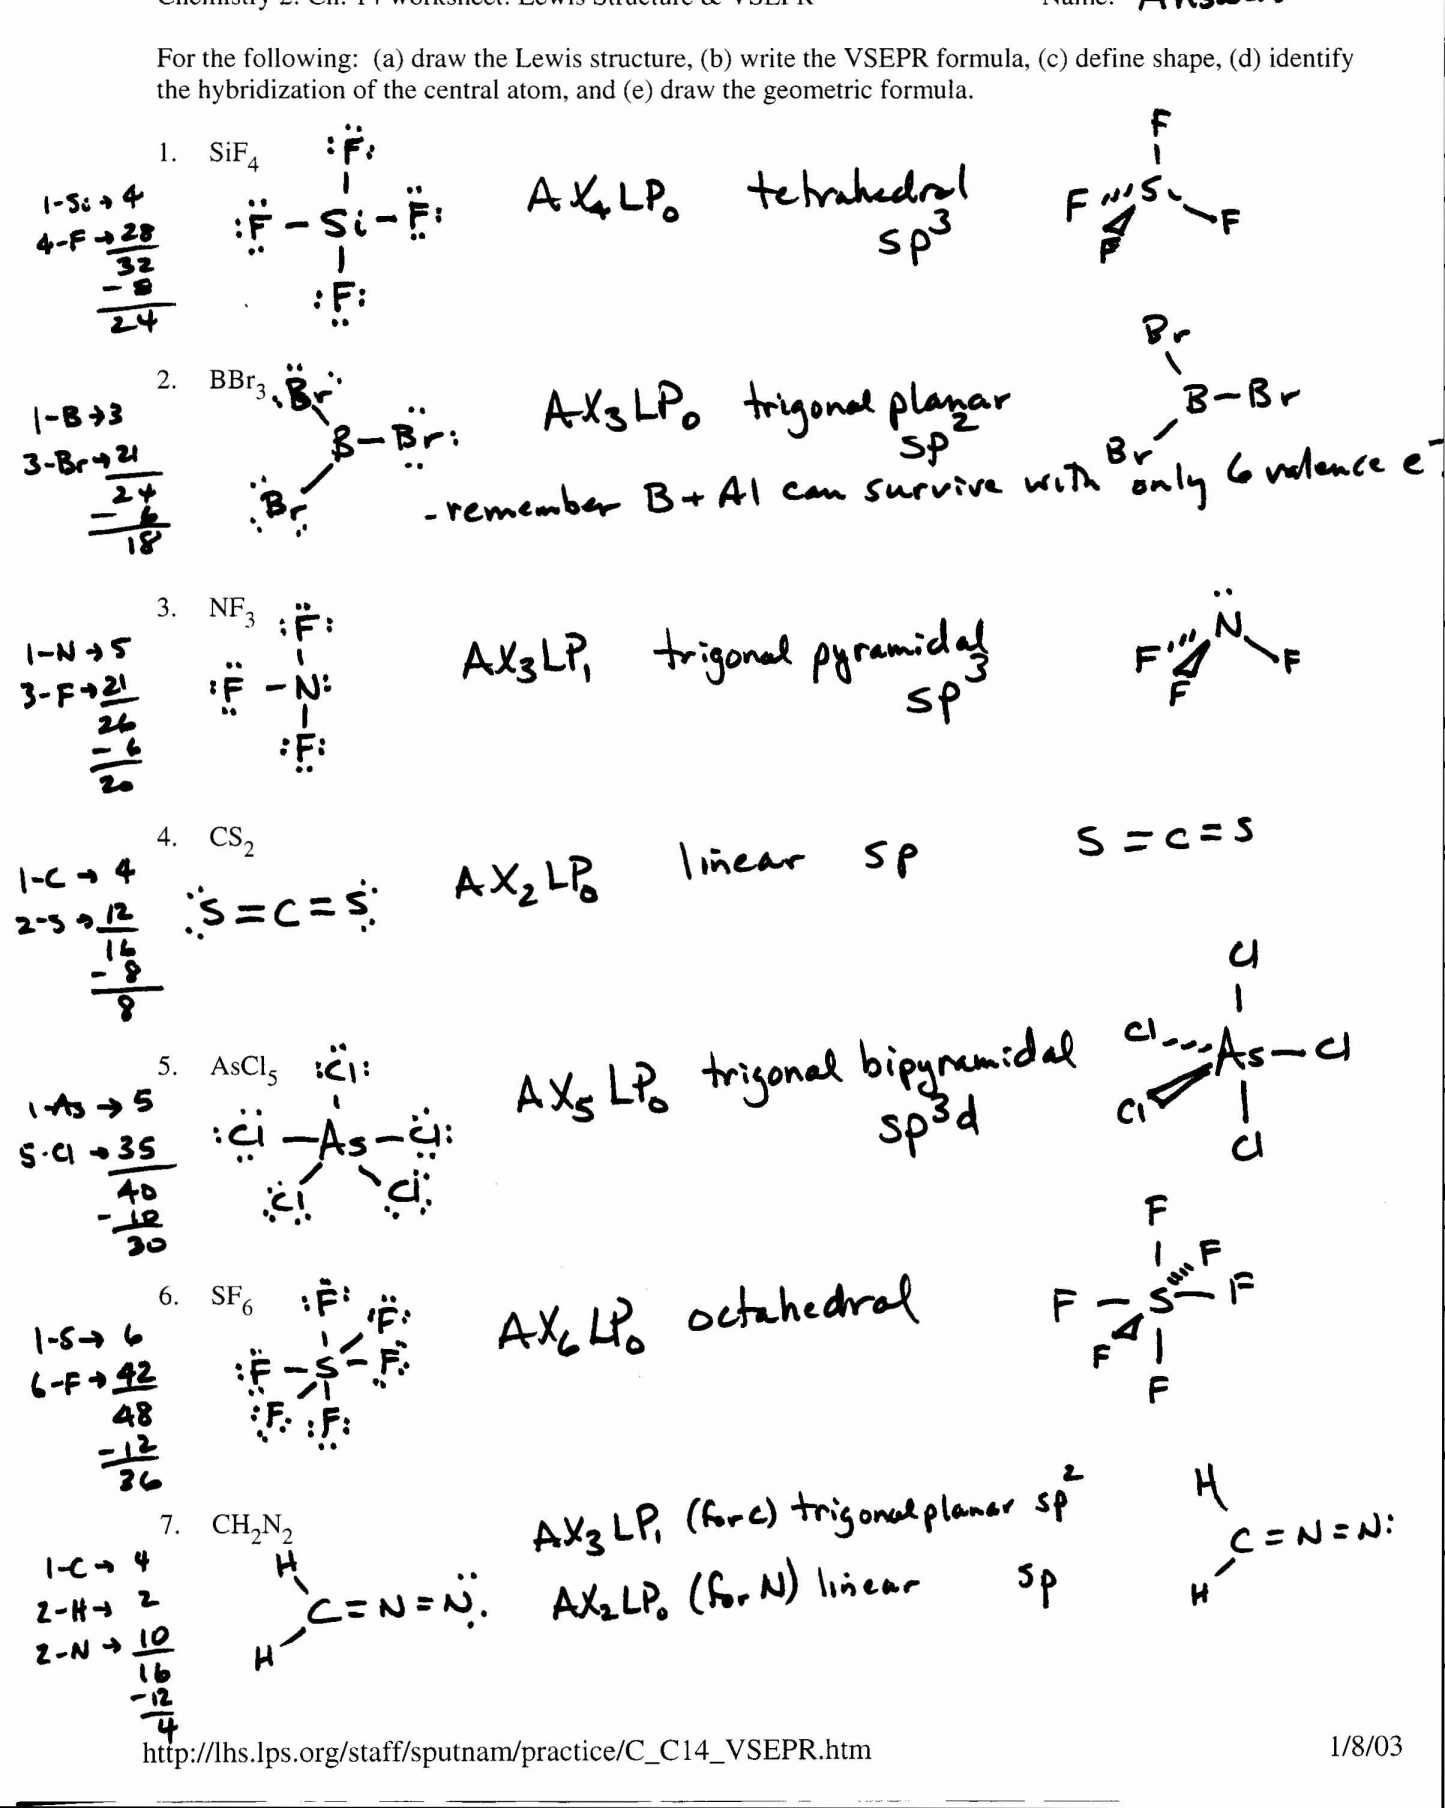 Worksheet Polarity Of Bonds Answers Lewis Dot Notation Worksheet